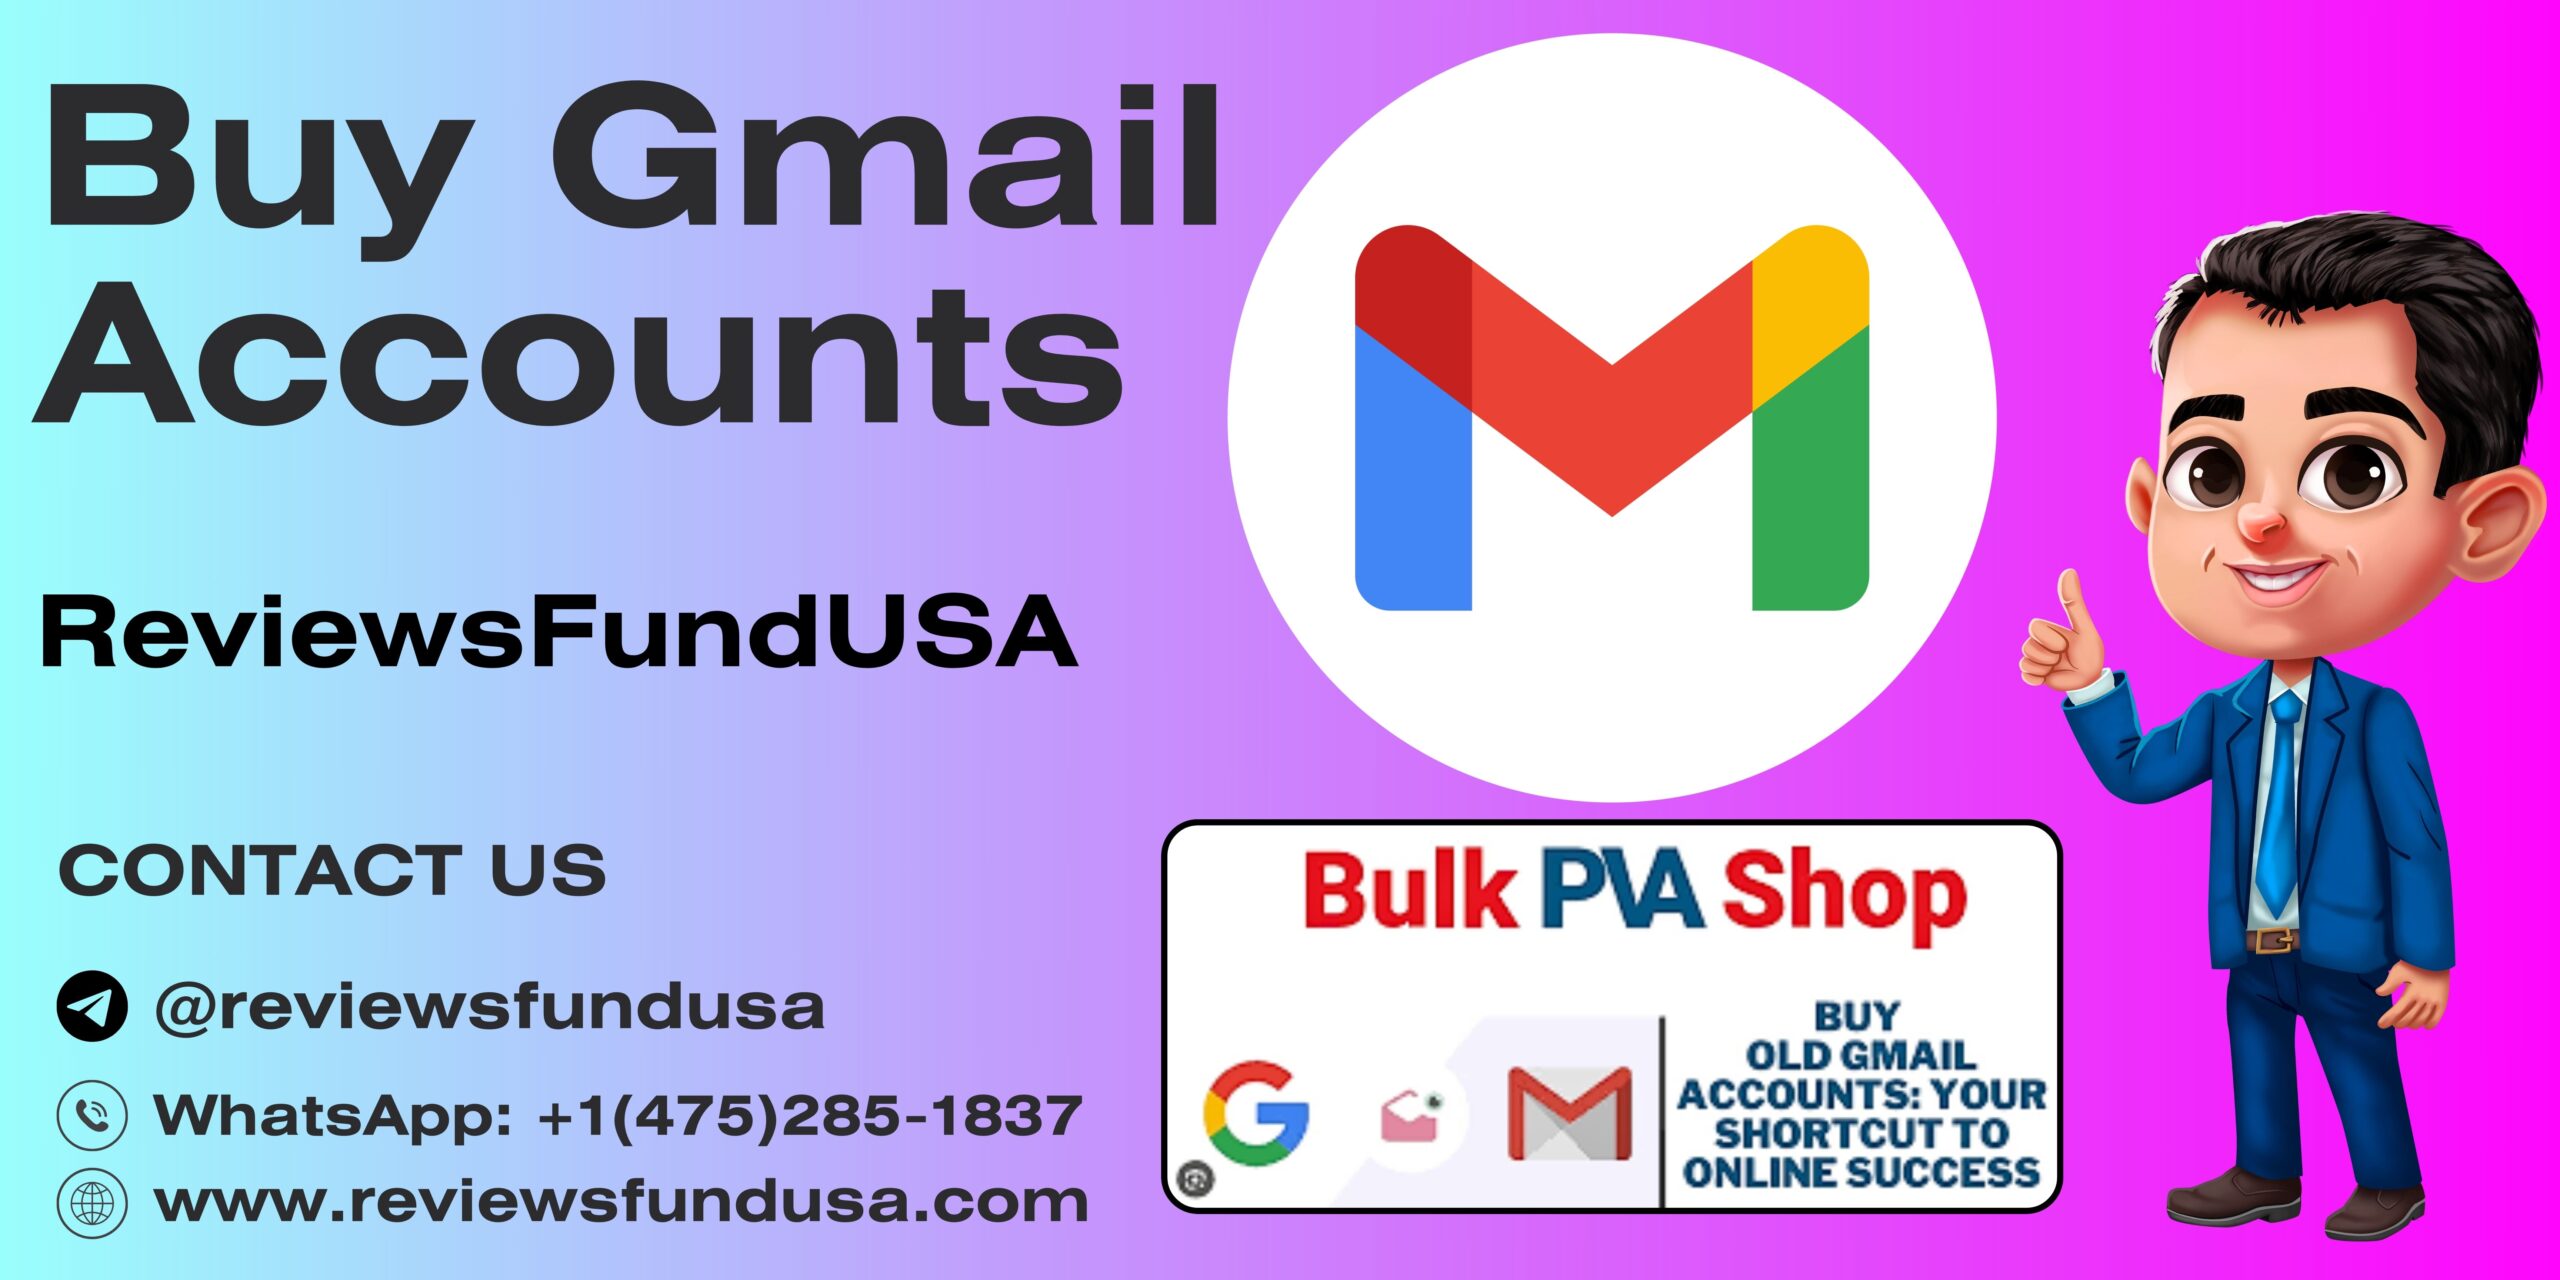 Buy Old Gmail Accounts PVA